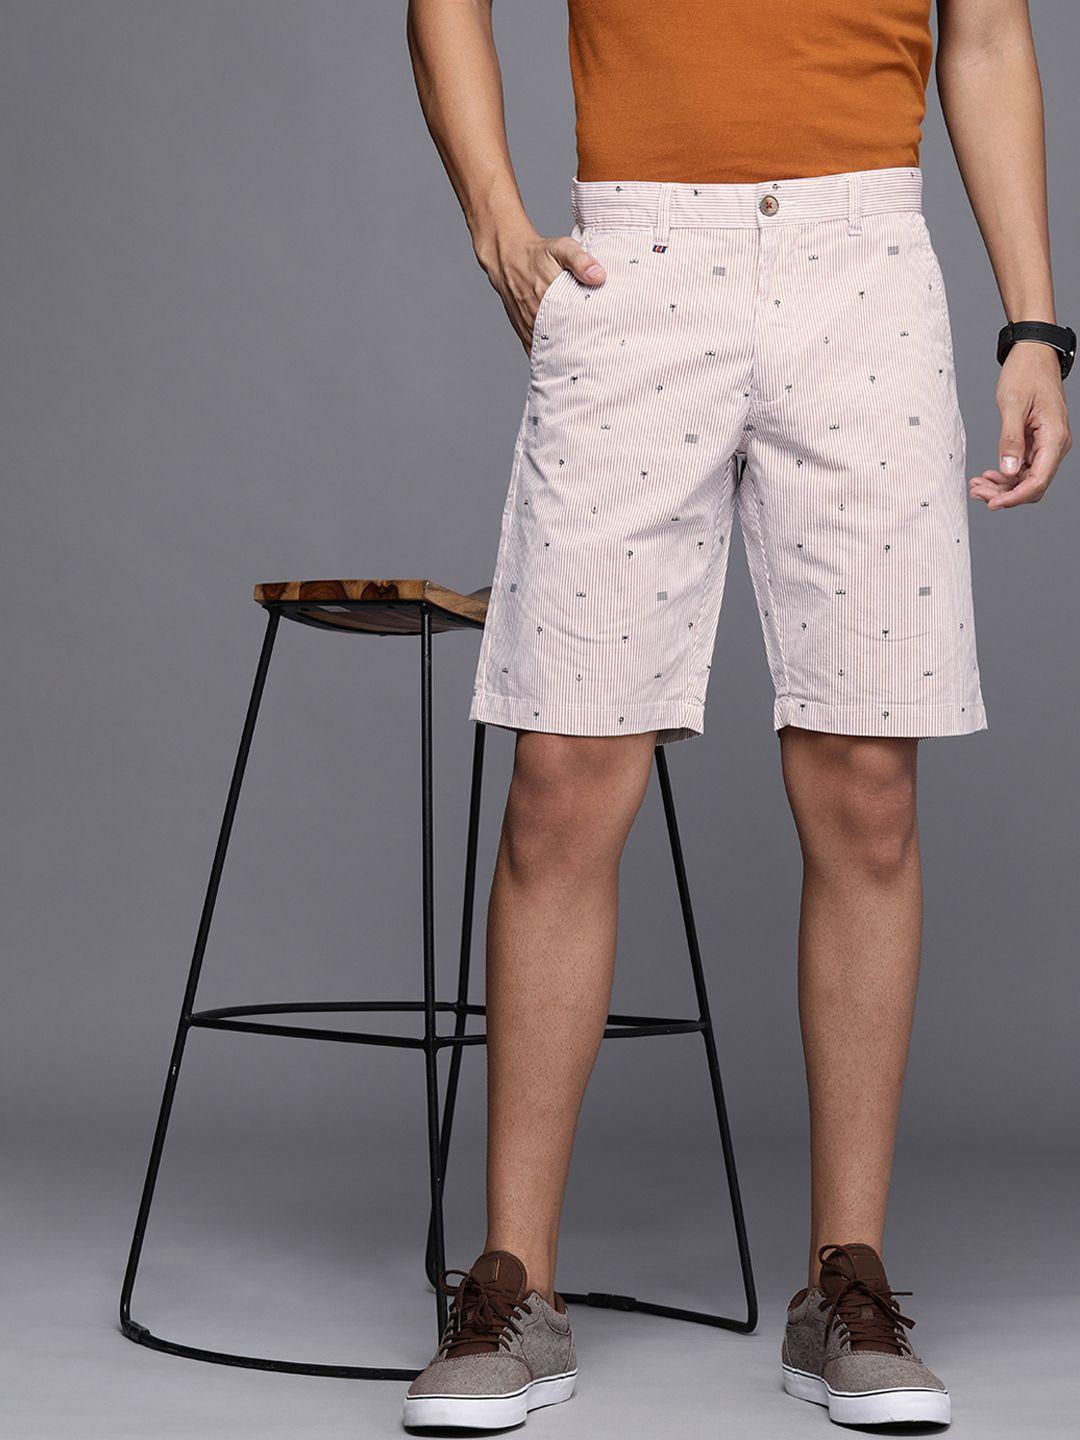 louis philippe sport men white & pink striped slim fit shorts